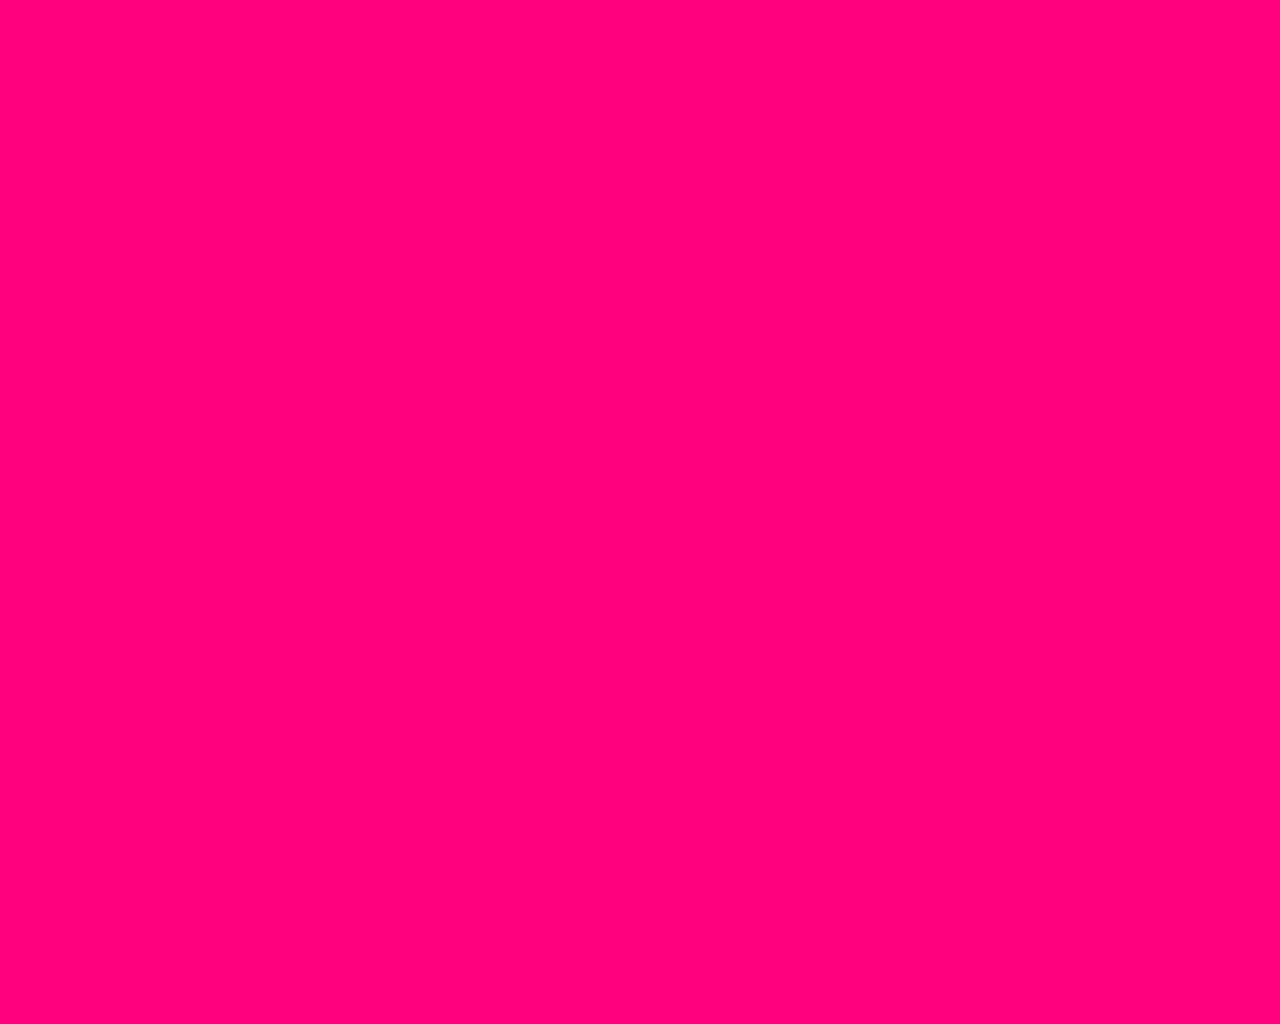 Bright Pink Background Wallpapersafari Coloring Wallpapers Download Free Images Wallpaper [coloring436.blogspot.com]